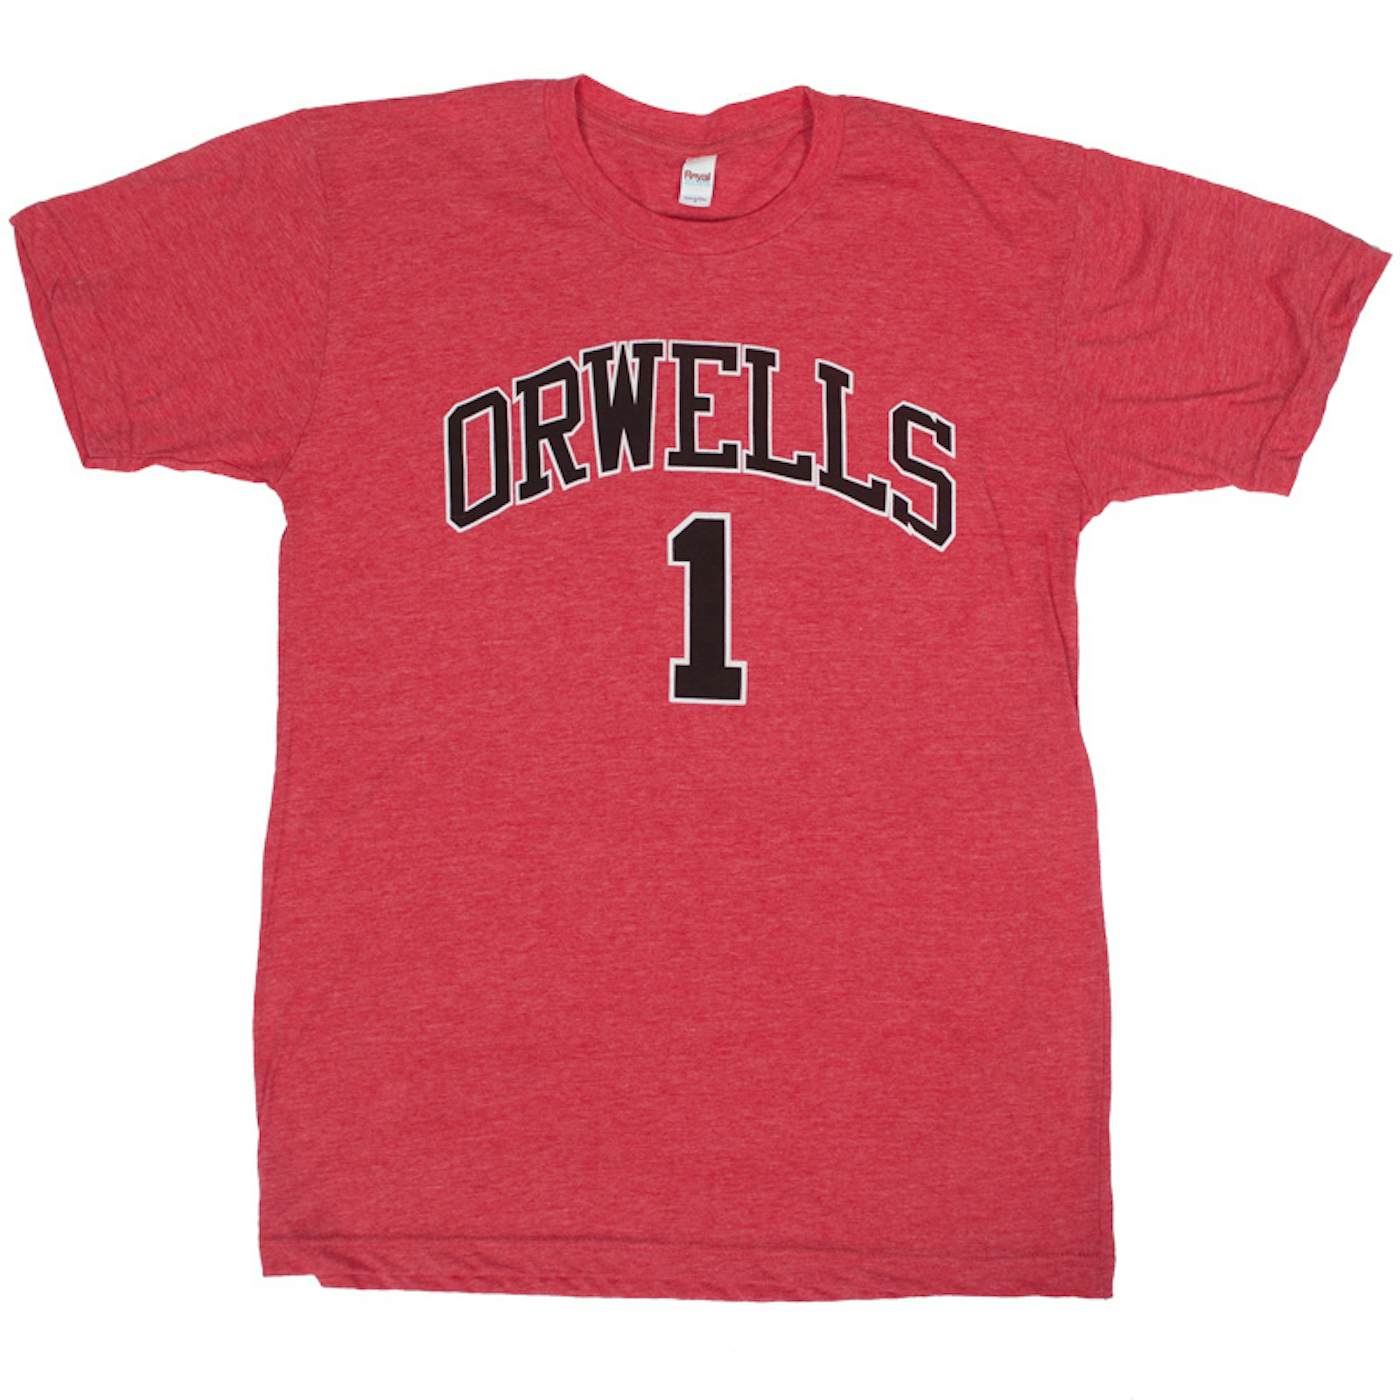 The Orwells 1 T-Shirt